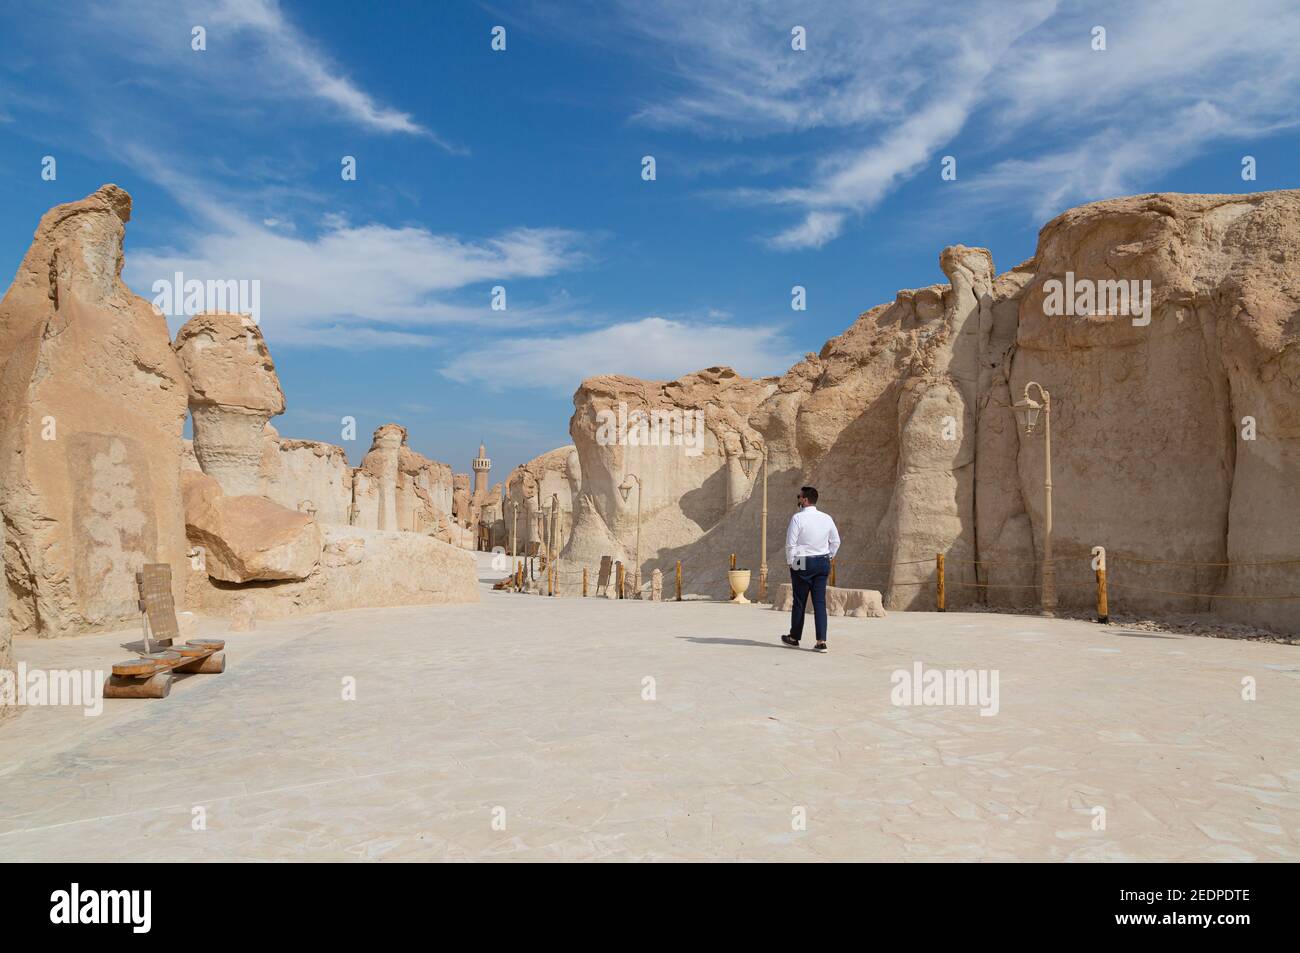 Lonely male tourist at Al Qarah Mountain in Eastern province of Saudi Arabia Stock Photo